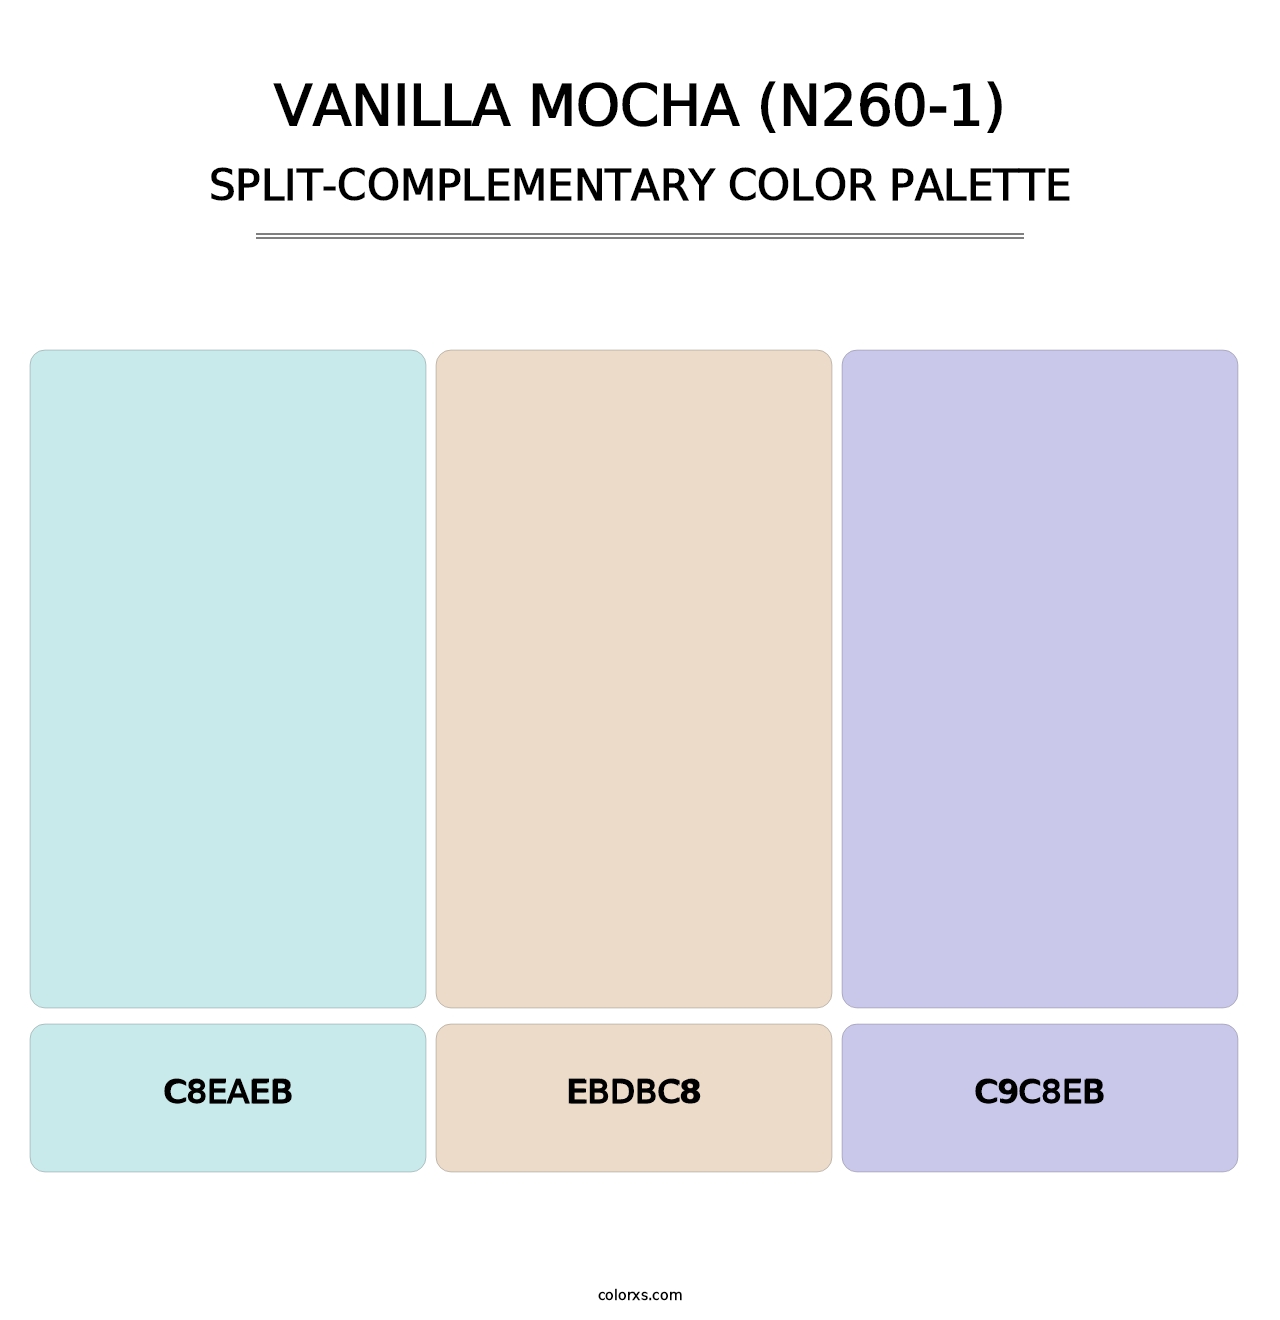 Vanilla Mocha (N260-1) - Split-Complementary Color Palette